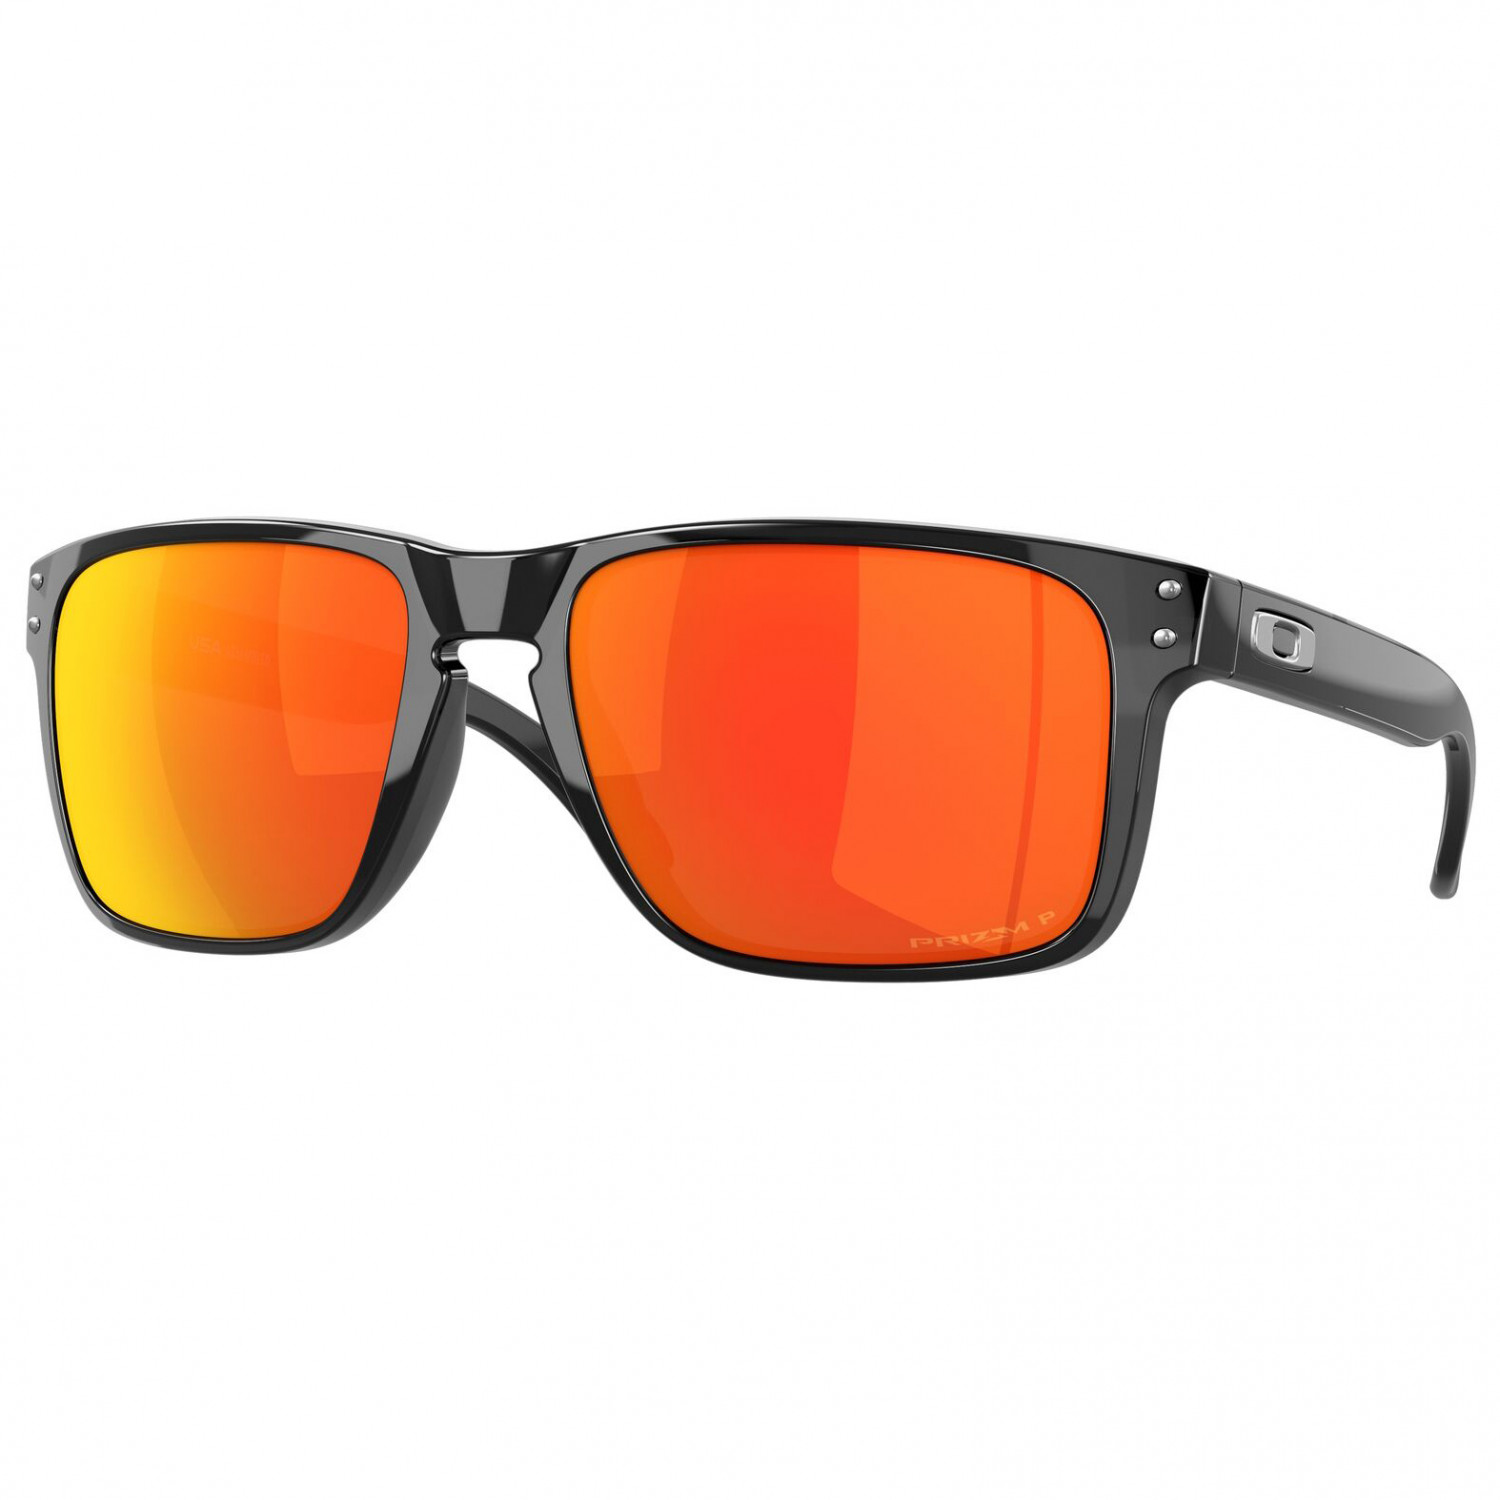 Солнцезащитные очки Oakley Holbrook XL Prizm Poarized S3 (VLT 17%), цвет Black Ink поляризационные солнцезащитные очки holbrook metal prizm oakley цвет metal gunmetal w prizmblkpol